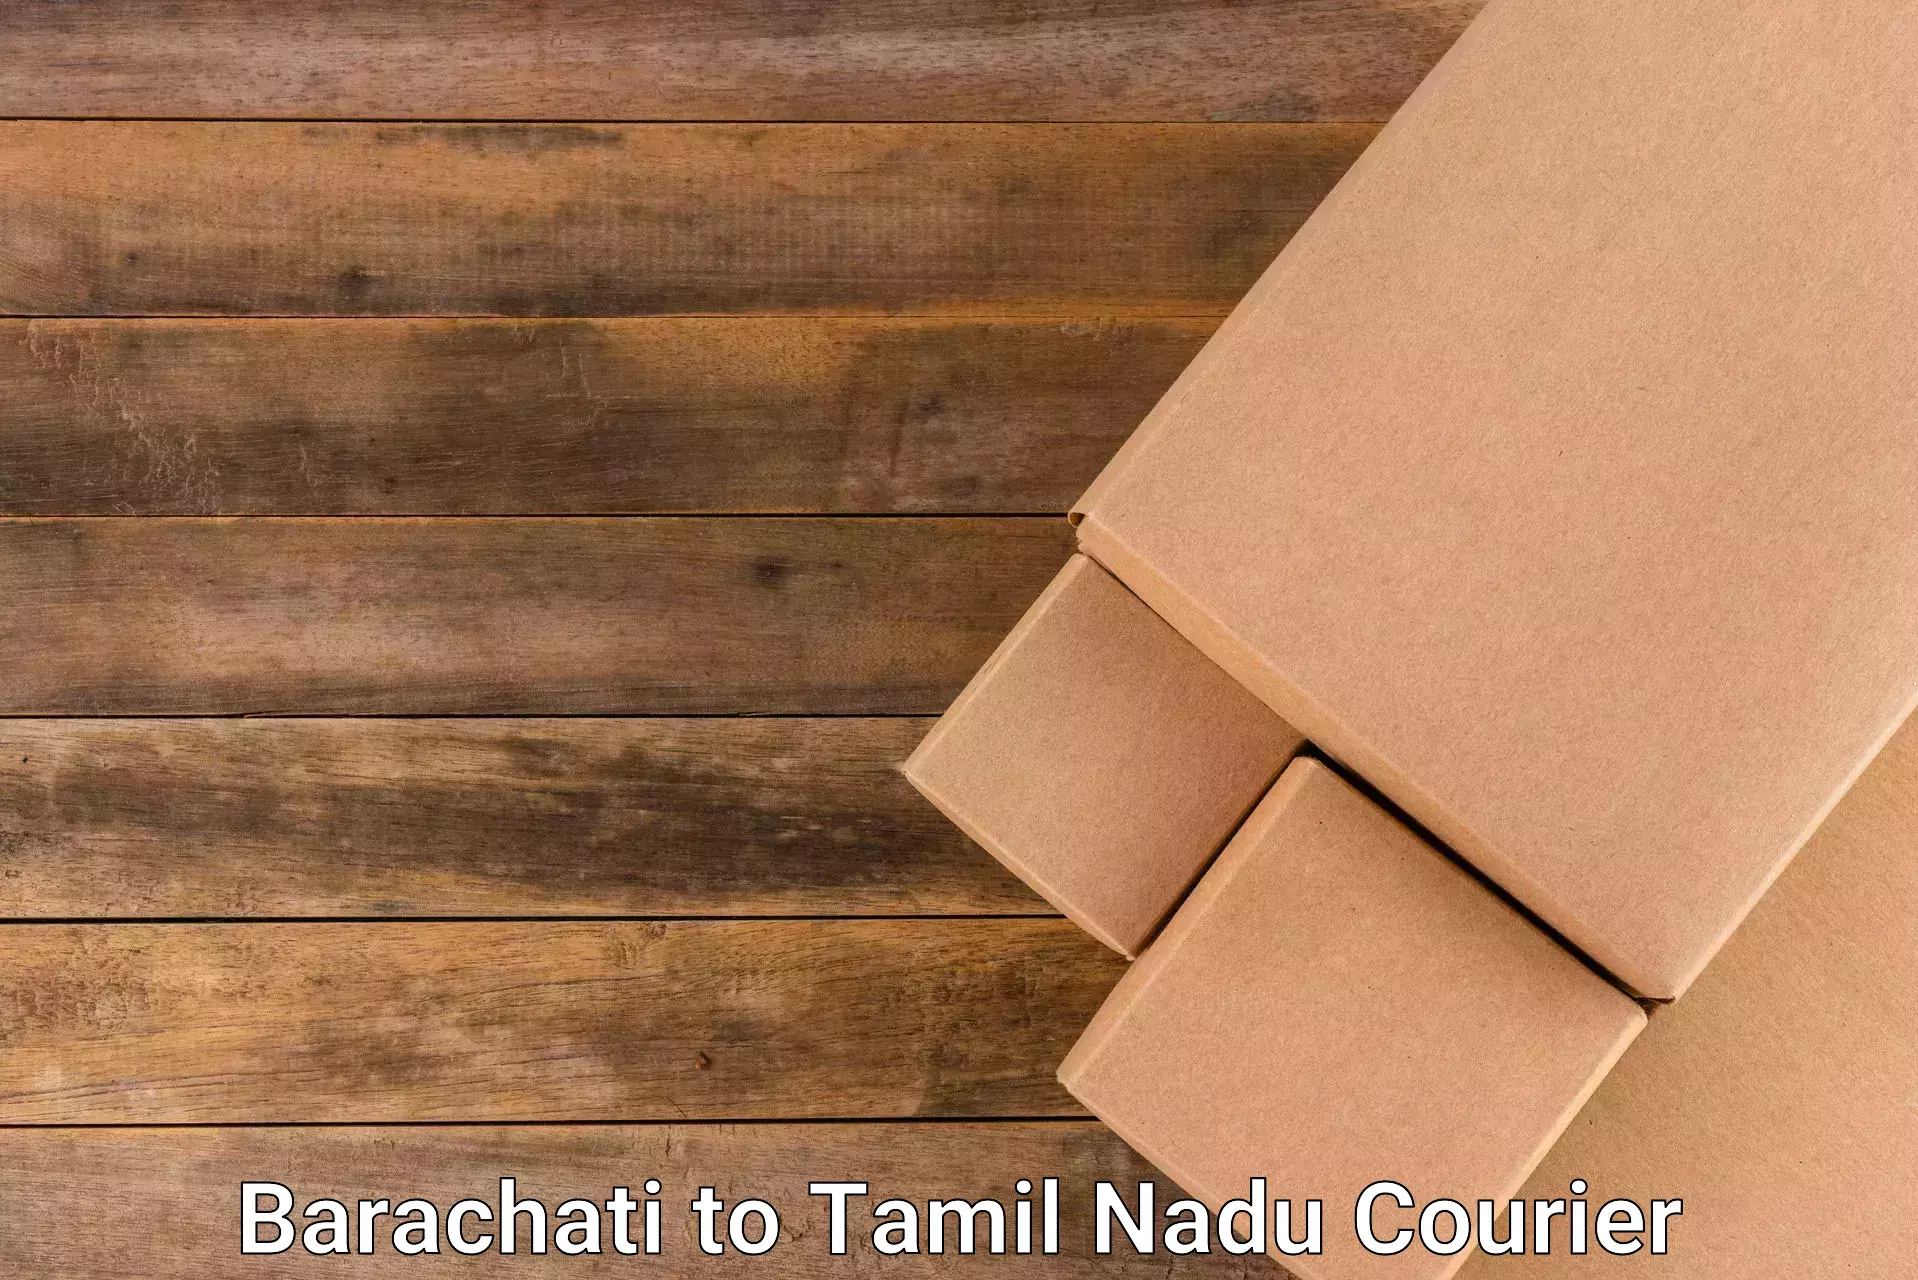 Efficient order fulfillment Barachati to Sankarapuram